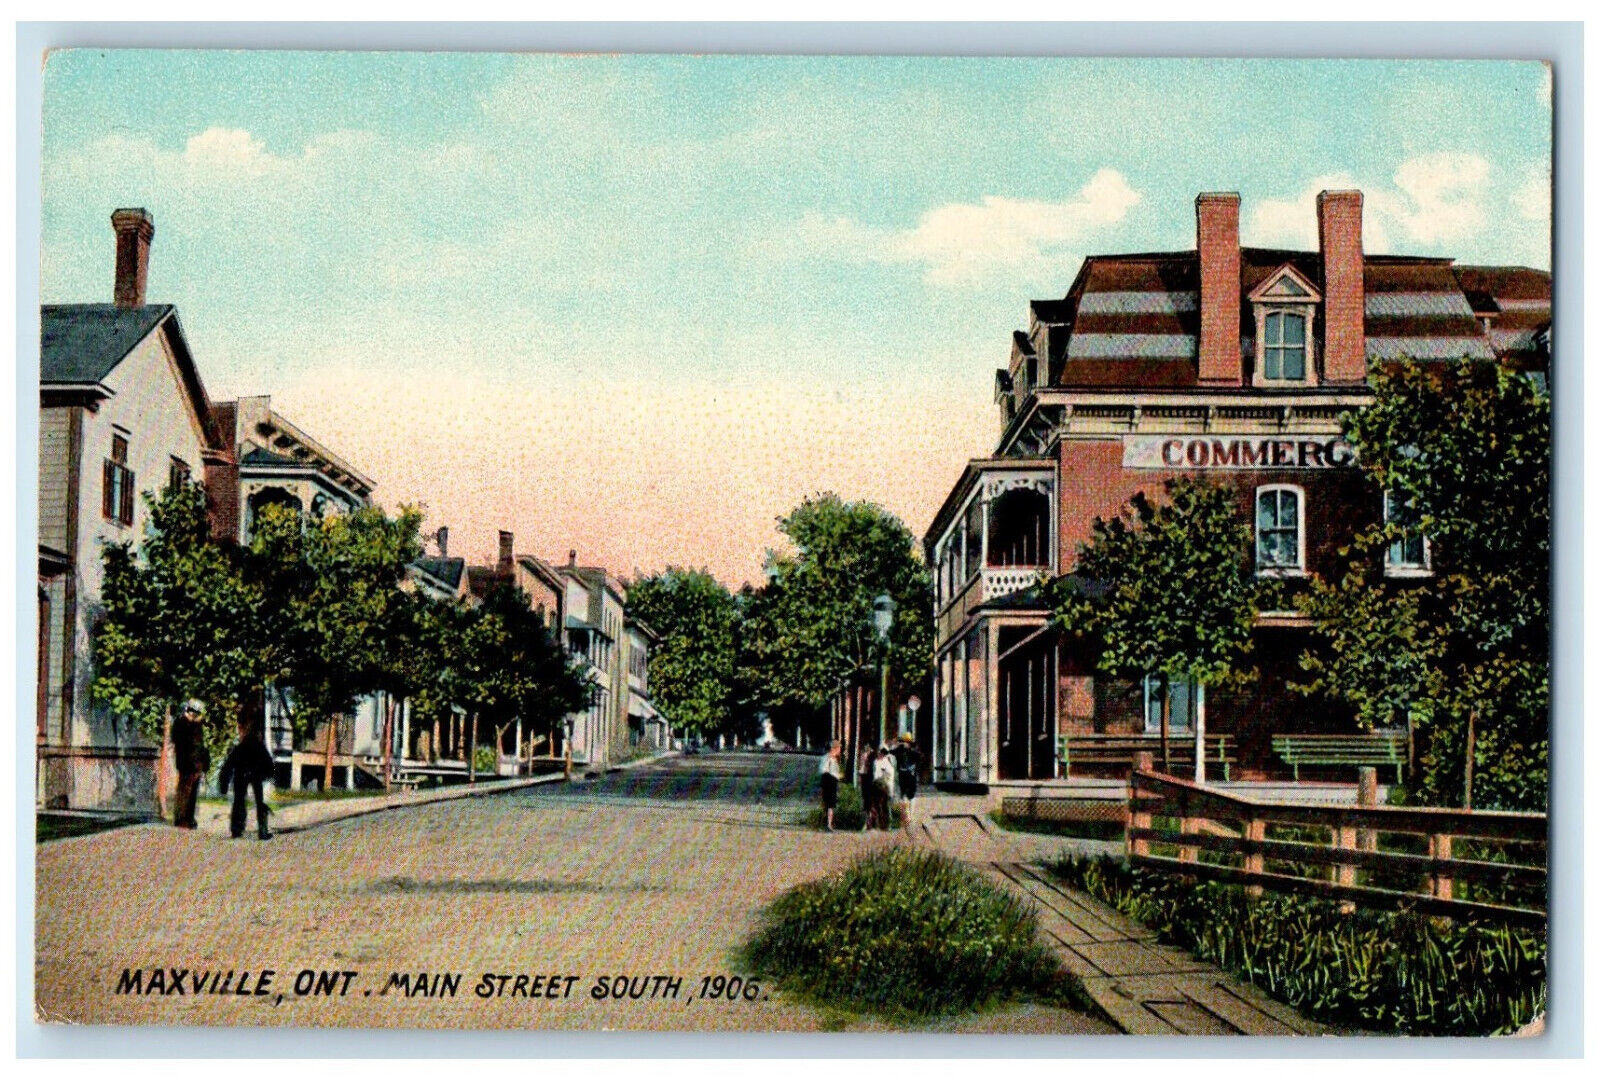 1906 Main Street South Maxville Ontario Canada Antique Postcard Postcard